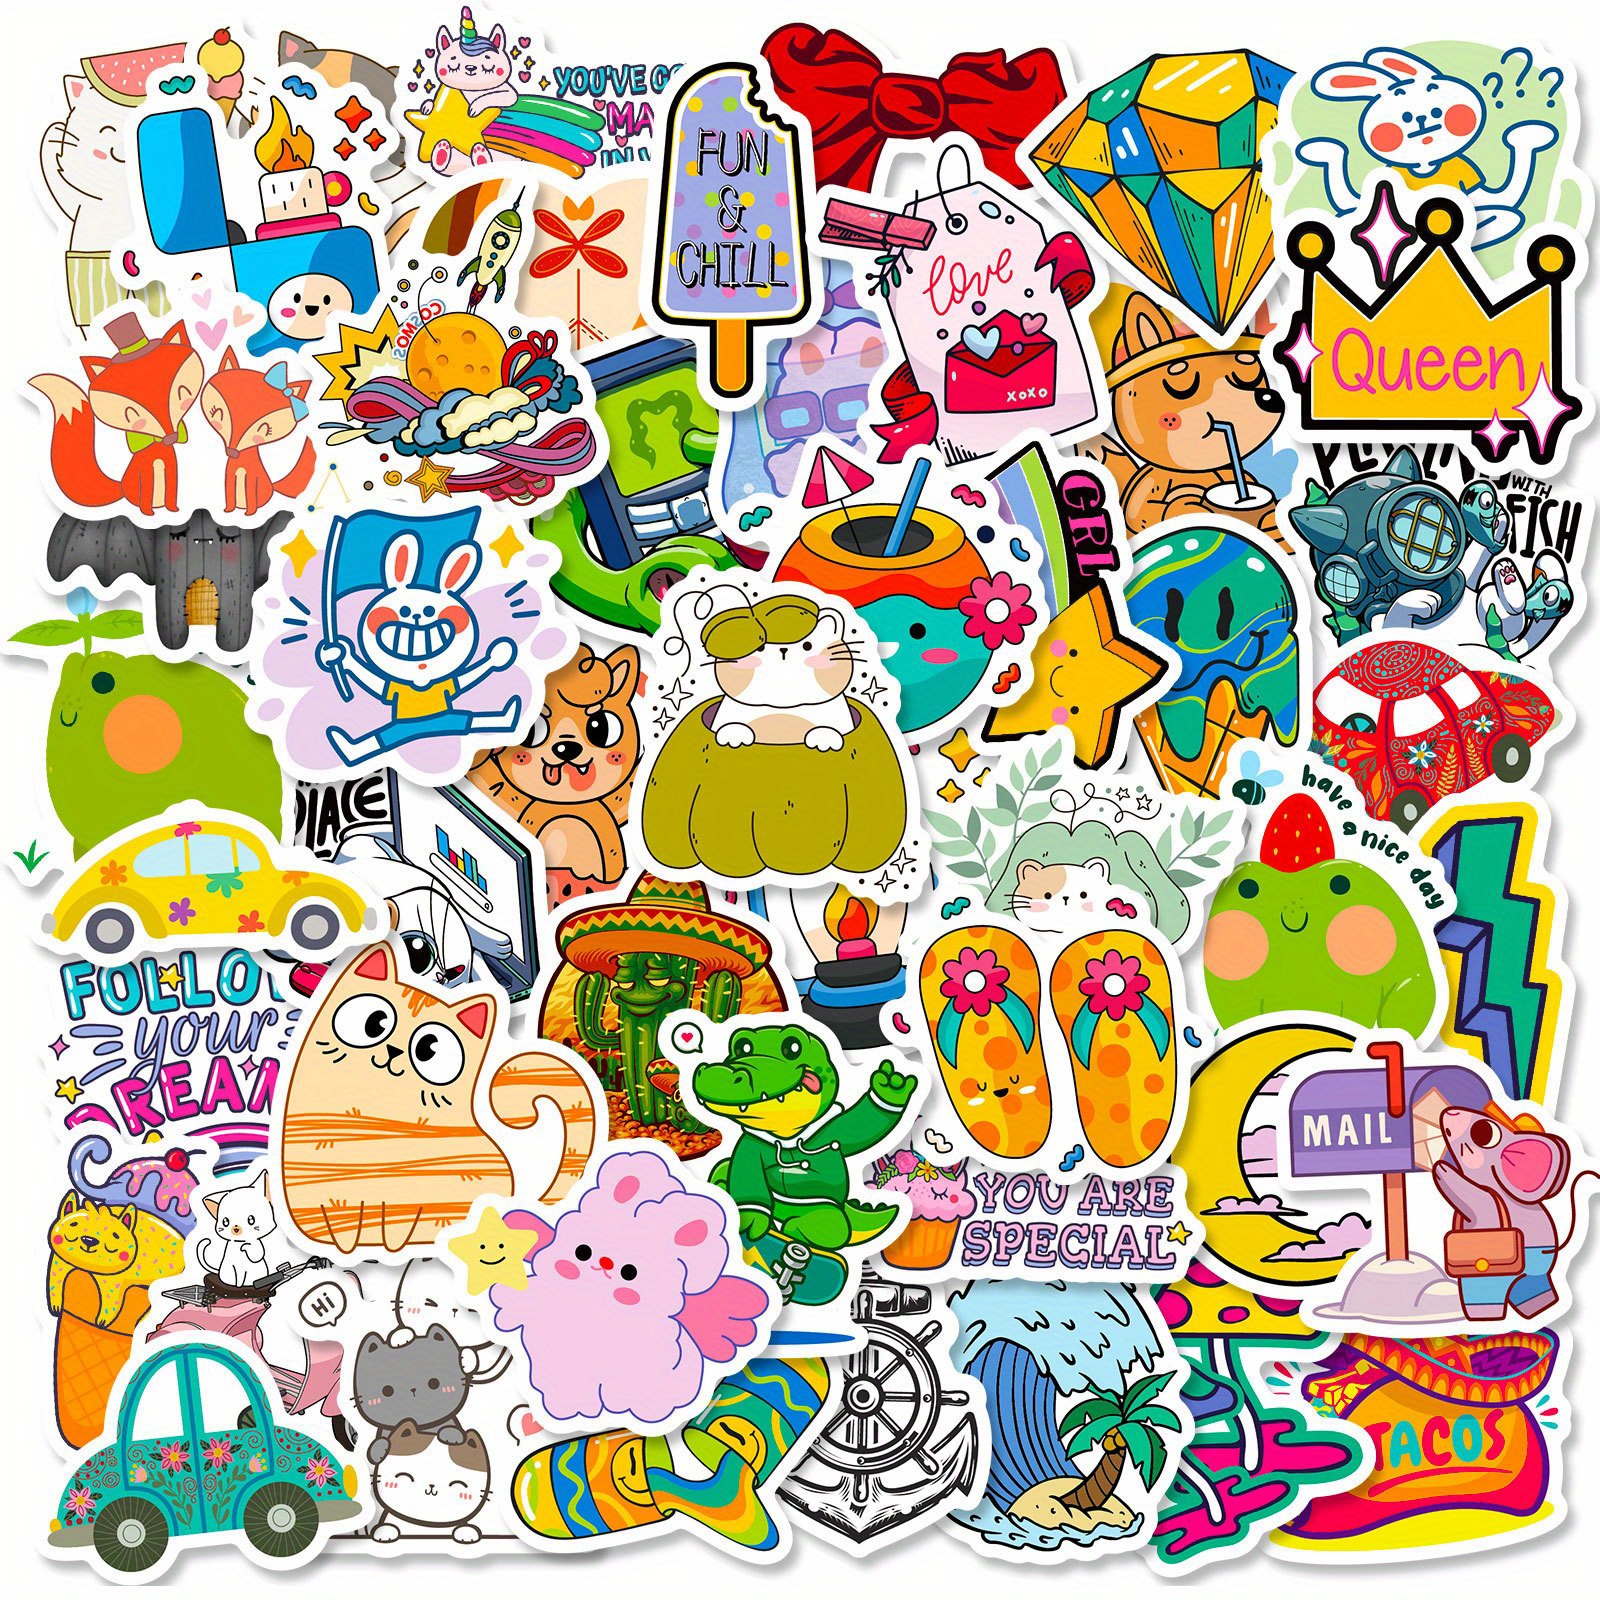 50 Pcs Funny Stickers Fun Cute Decal Sticker Mixed Graffiti